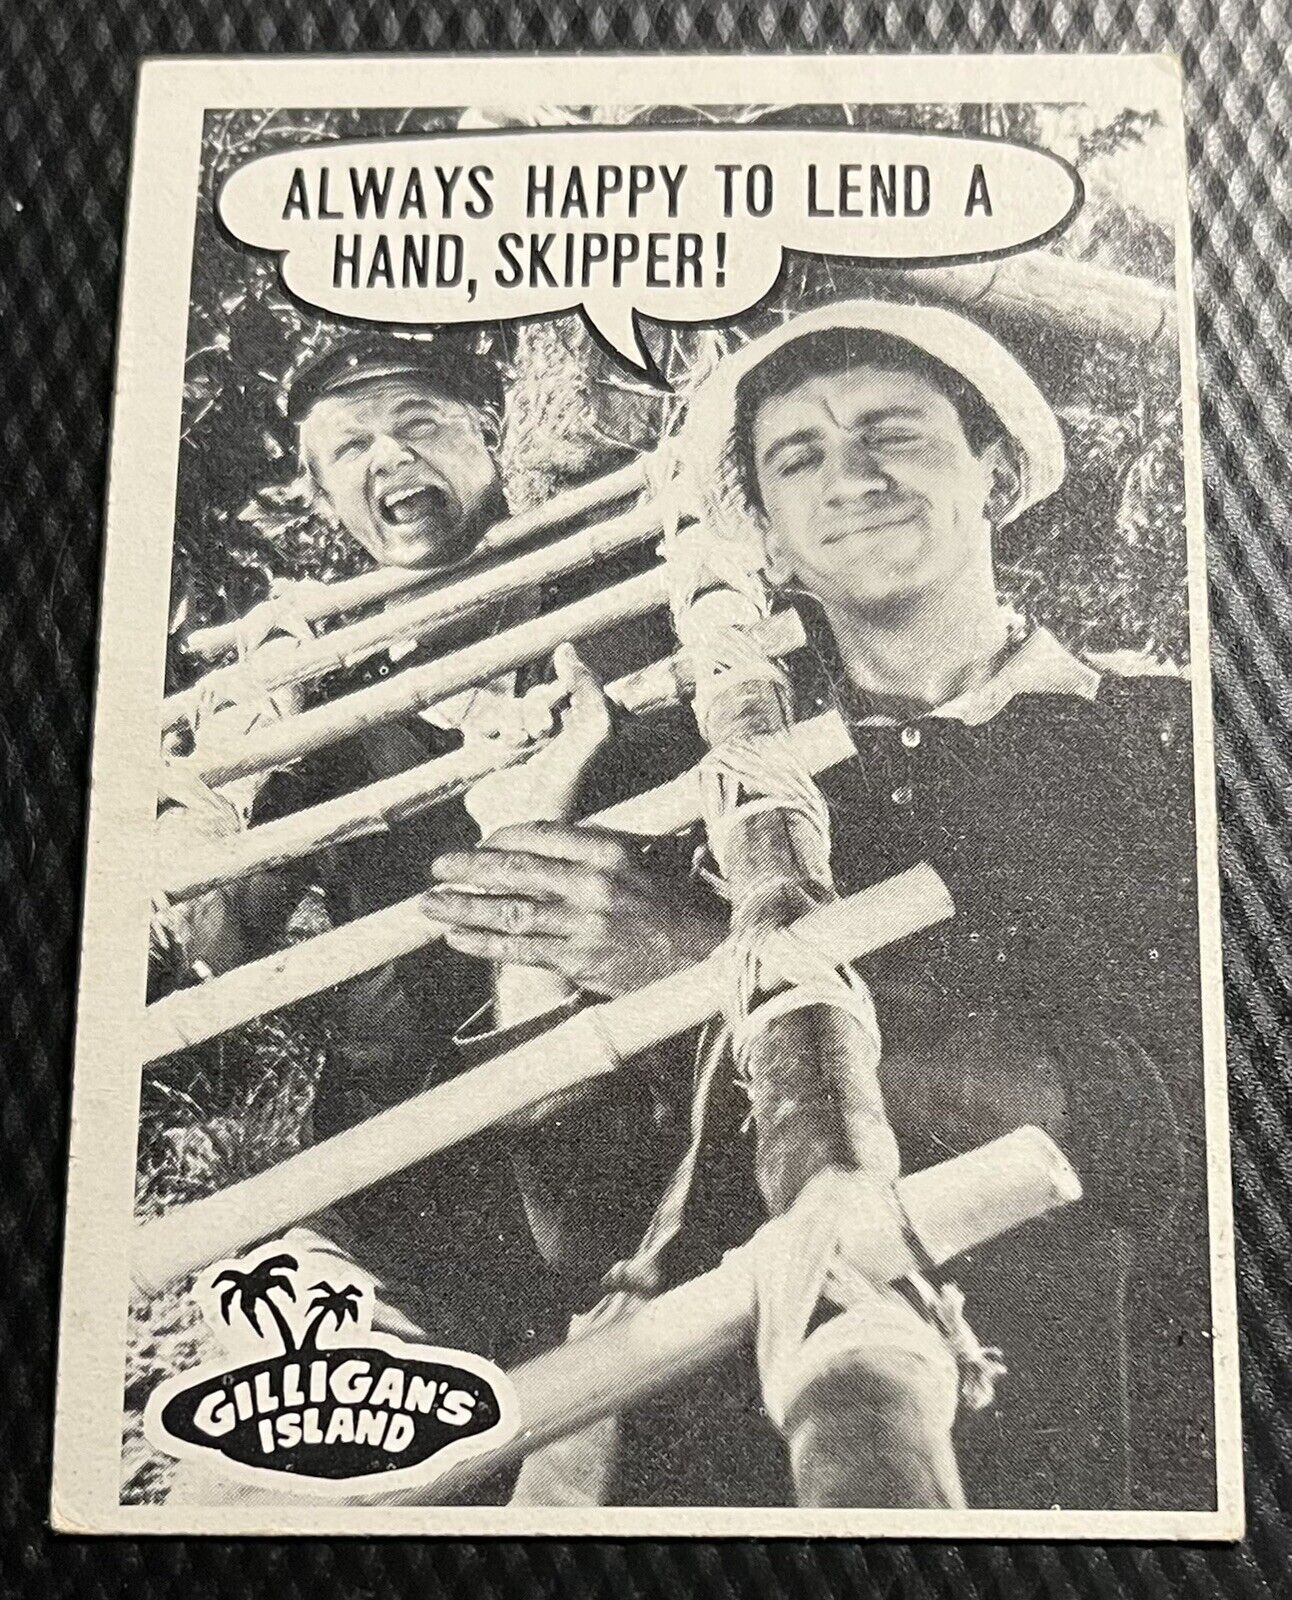 1965 Topps Gilligan's Island #14 - Always Happy 2 Lend Hand Skipper - No Creases